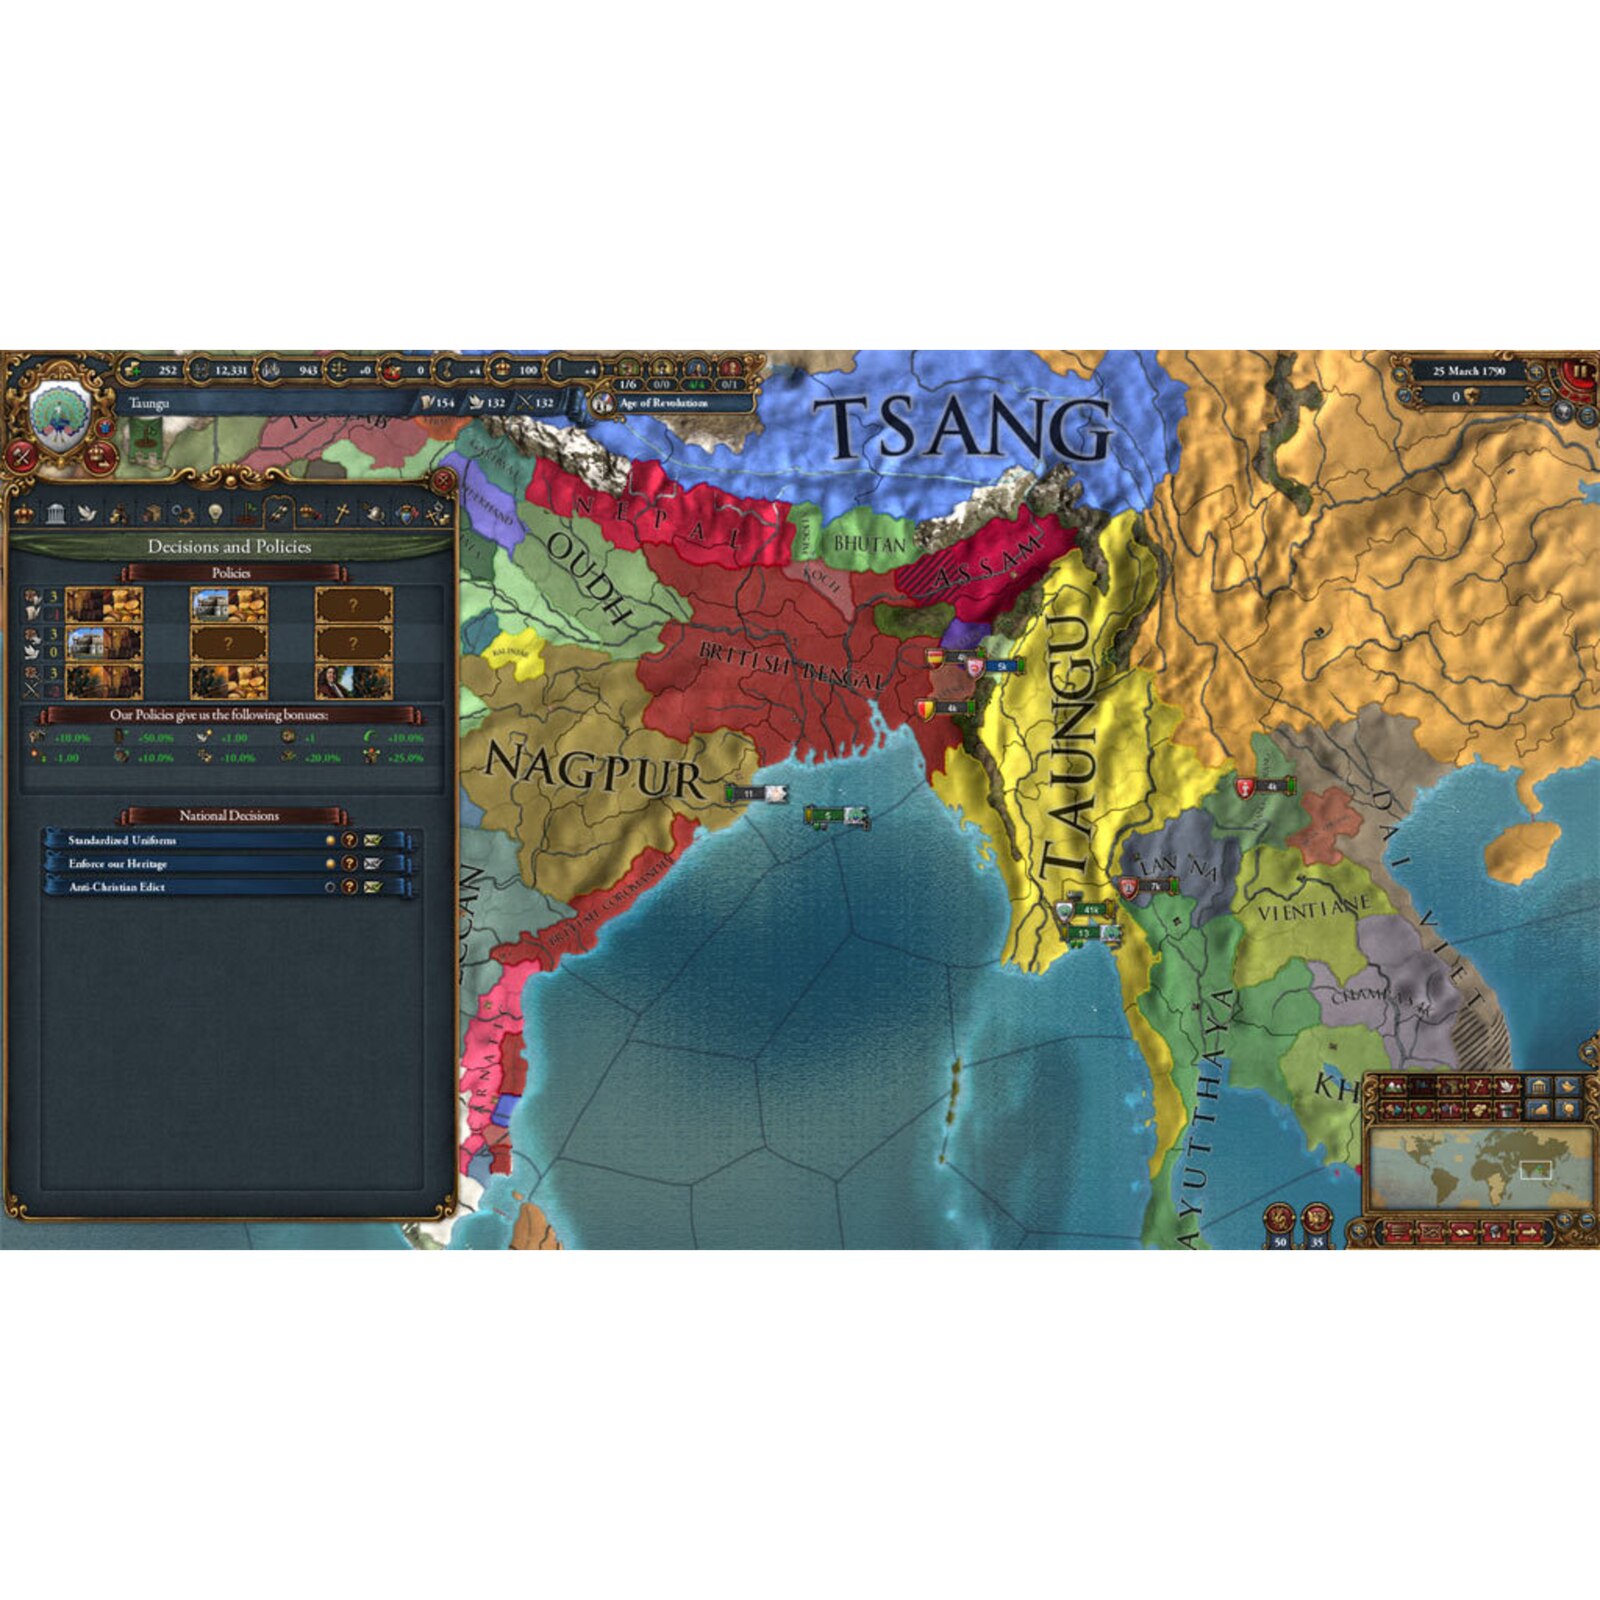 Expansion - europa universalis iv: dharma crack torrent